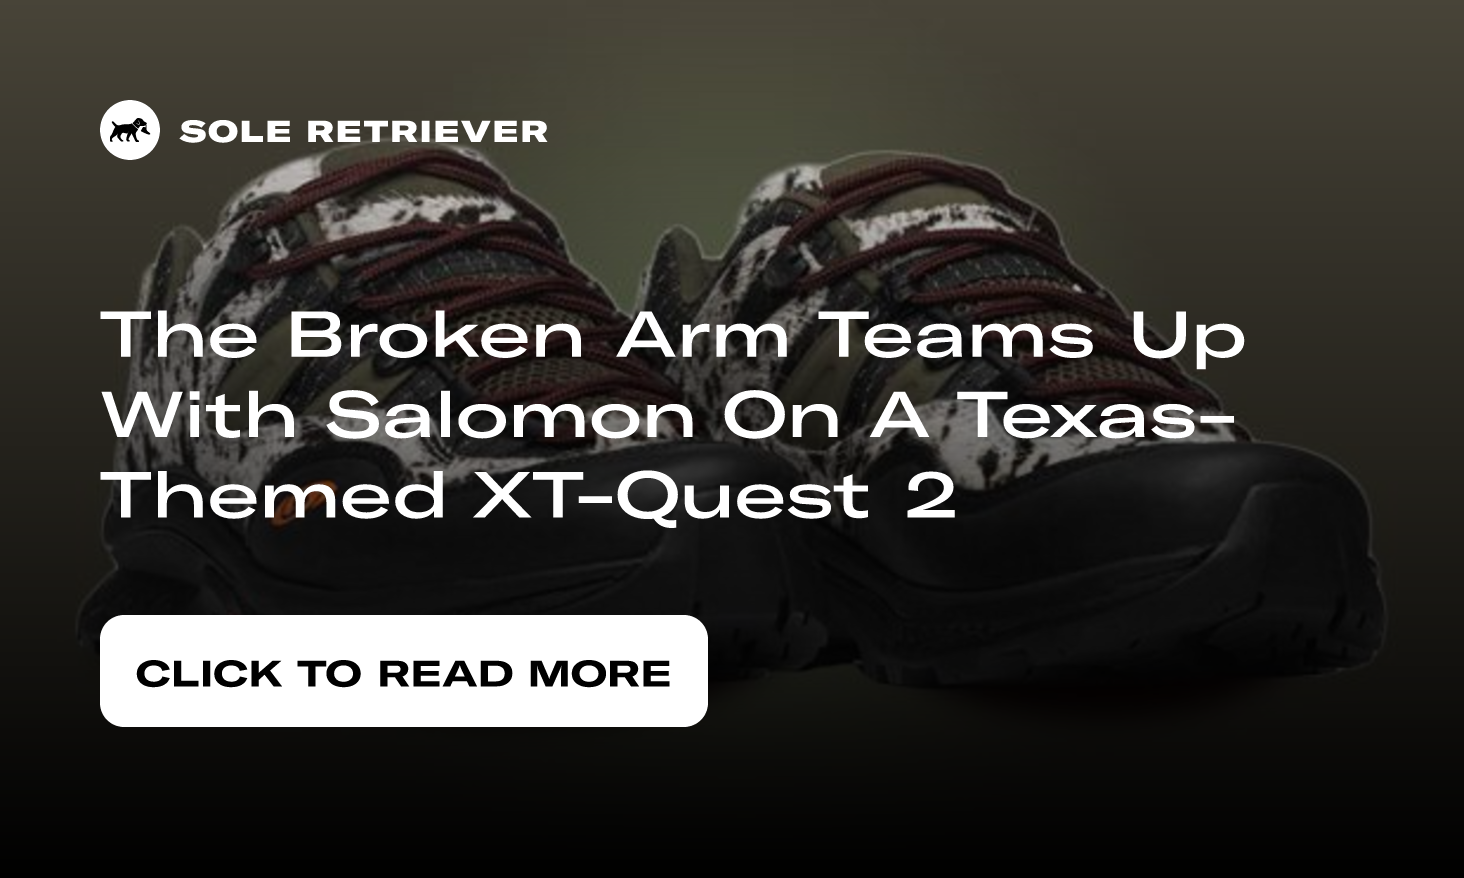 The Broken Arm Teams Up With Salomon On A Texas-Themed XT-Quest 2